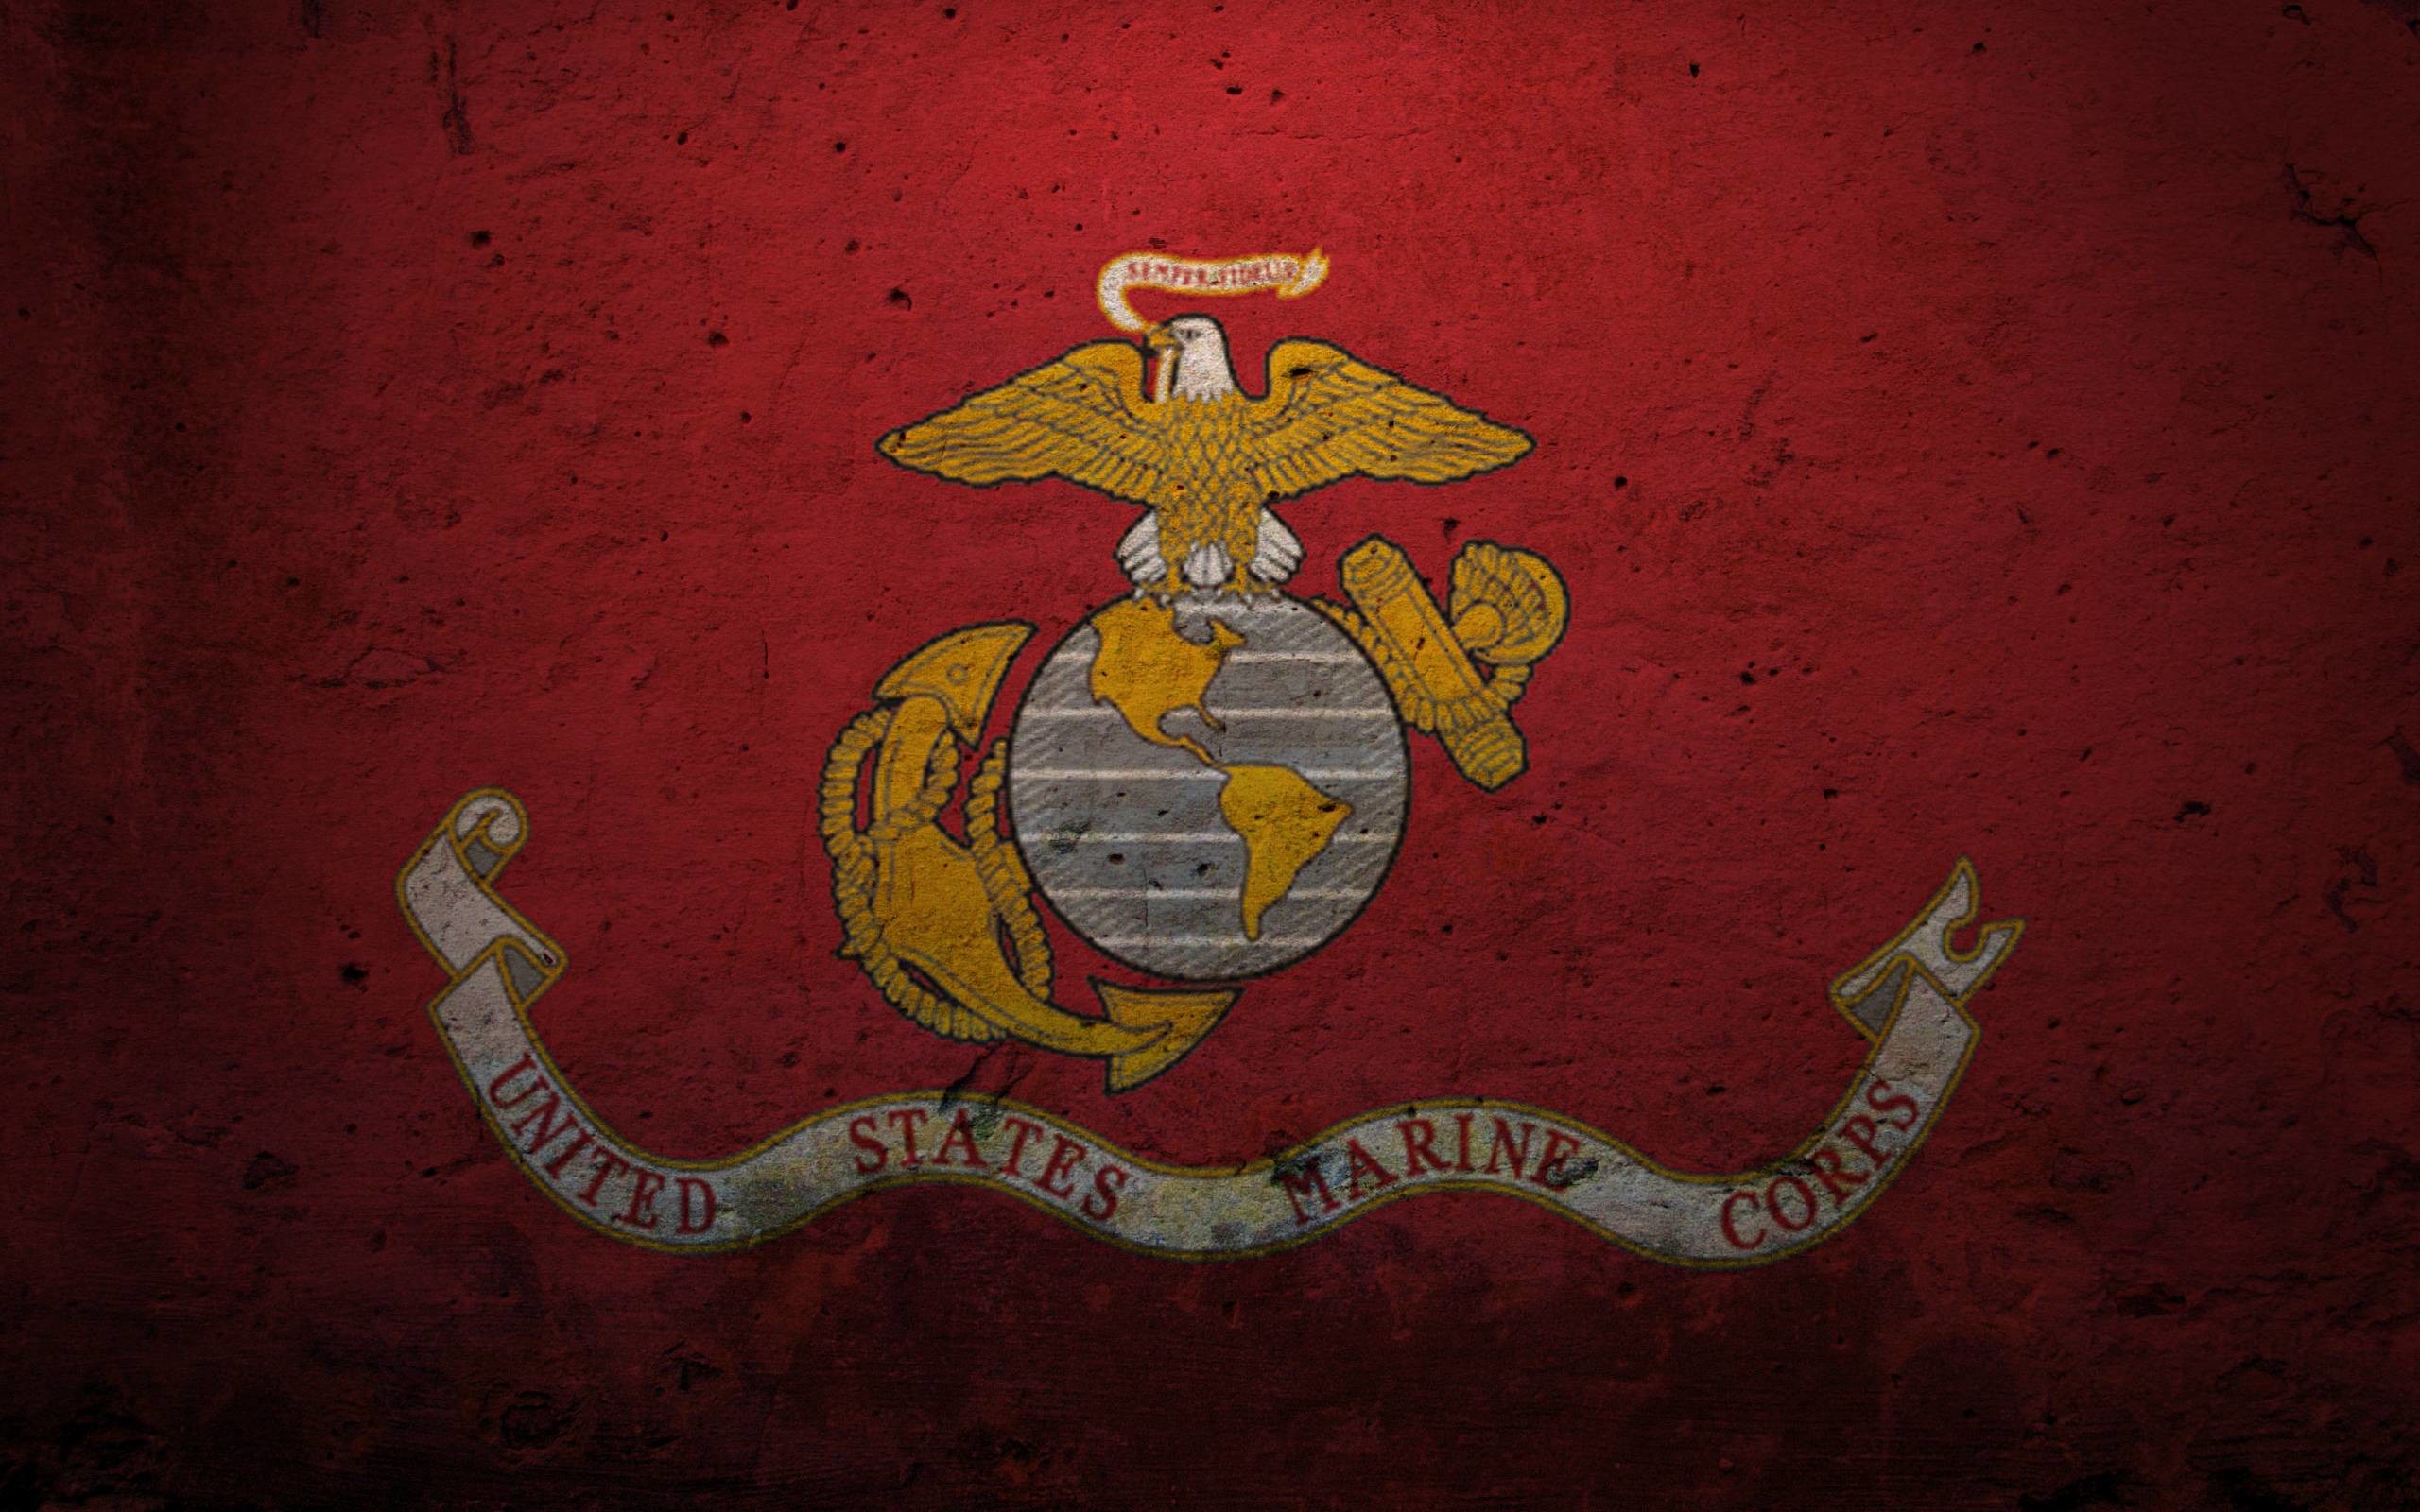 USA Marine Corps Wallpapers HD 1600Ã1200 – High Definition .